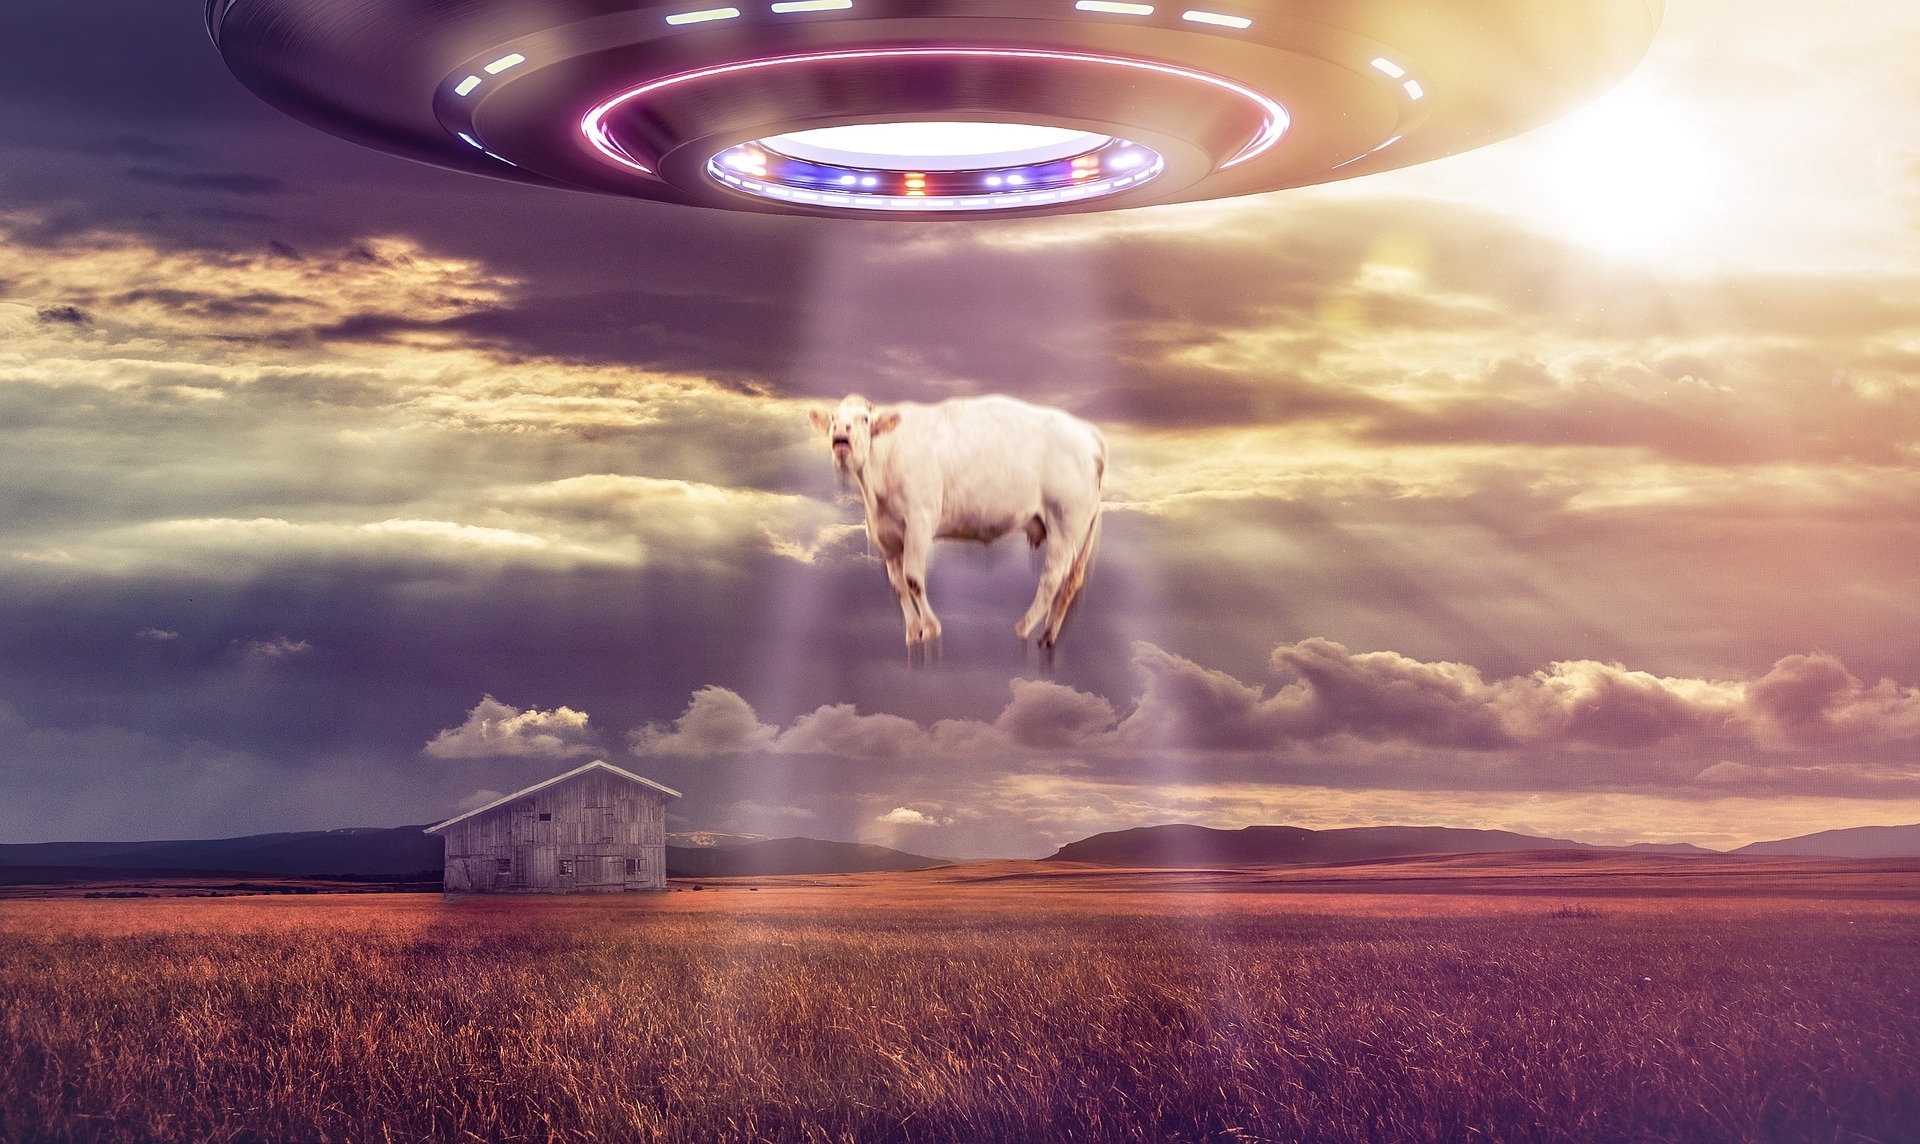 sci fi, abduction, ufo, spaceship, cow, field